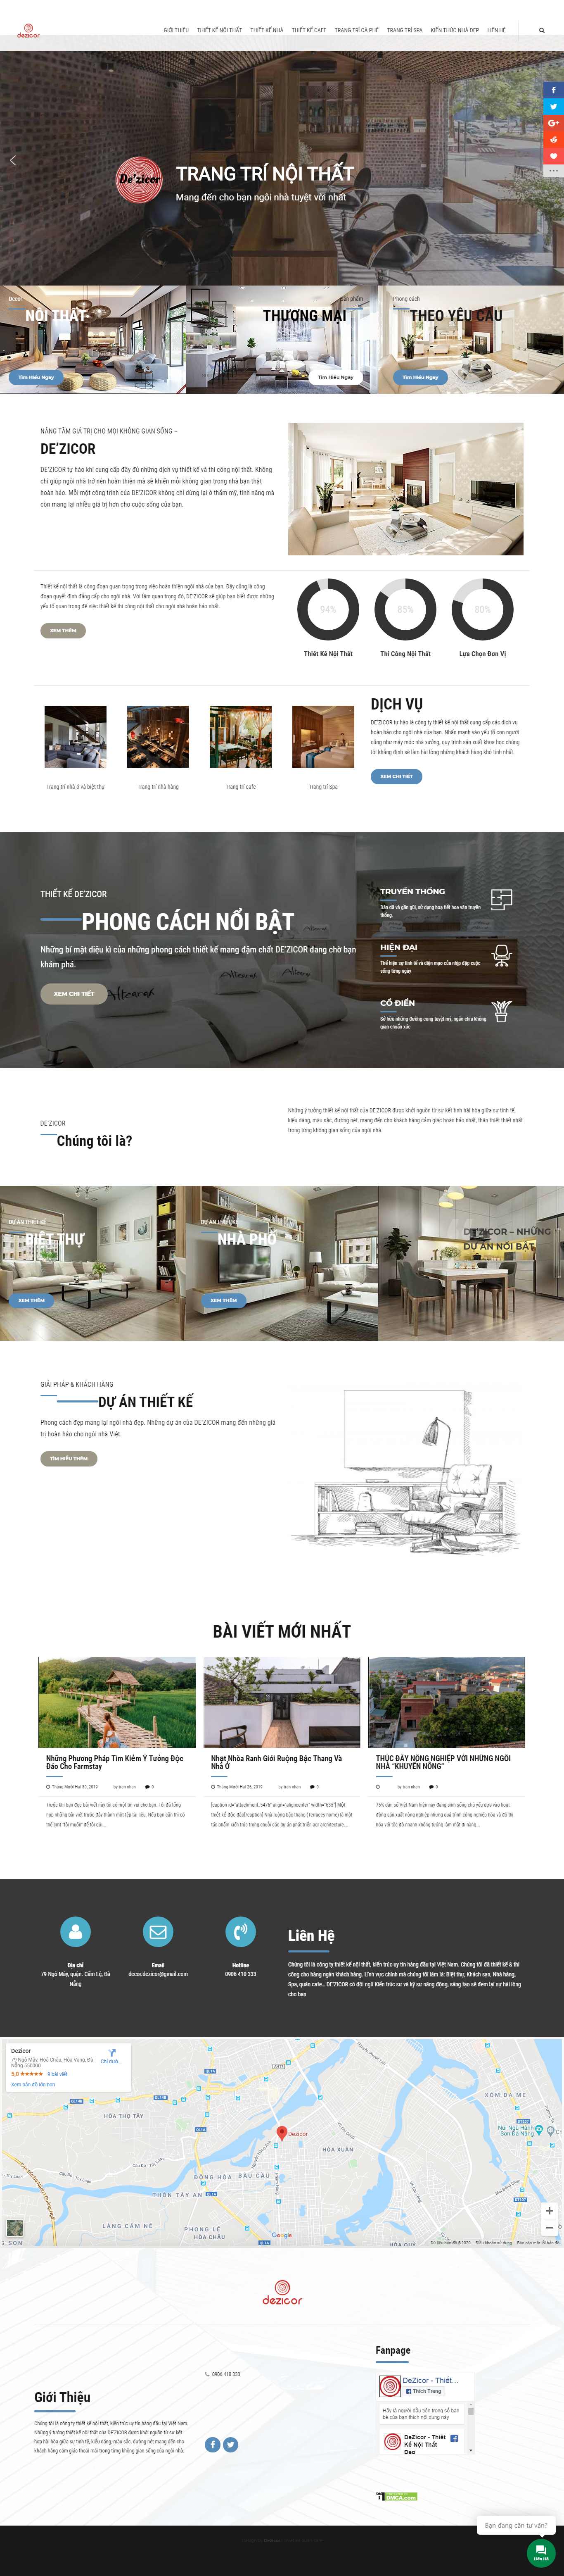 Thiết kế Website thiết kế nội thất - dezicor.com